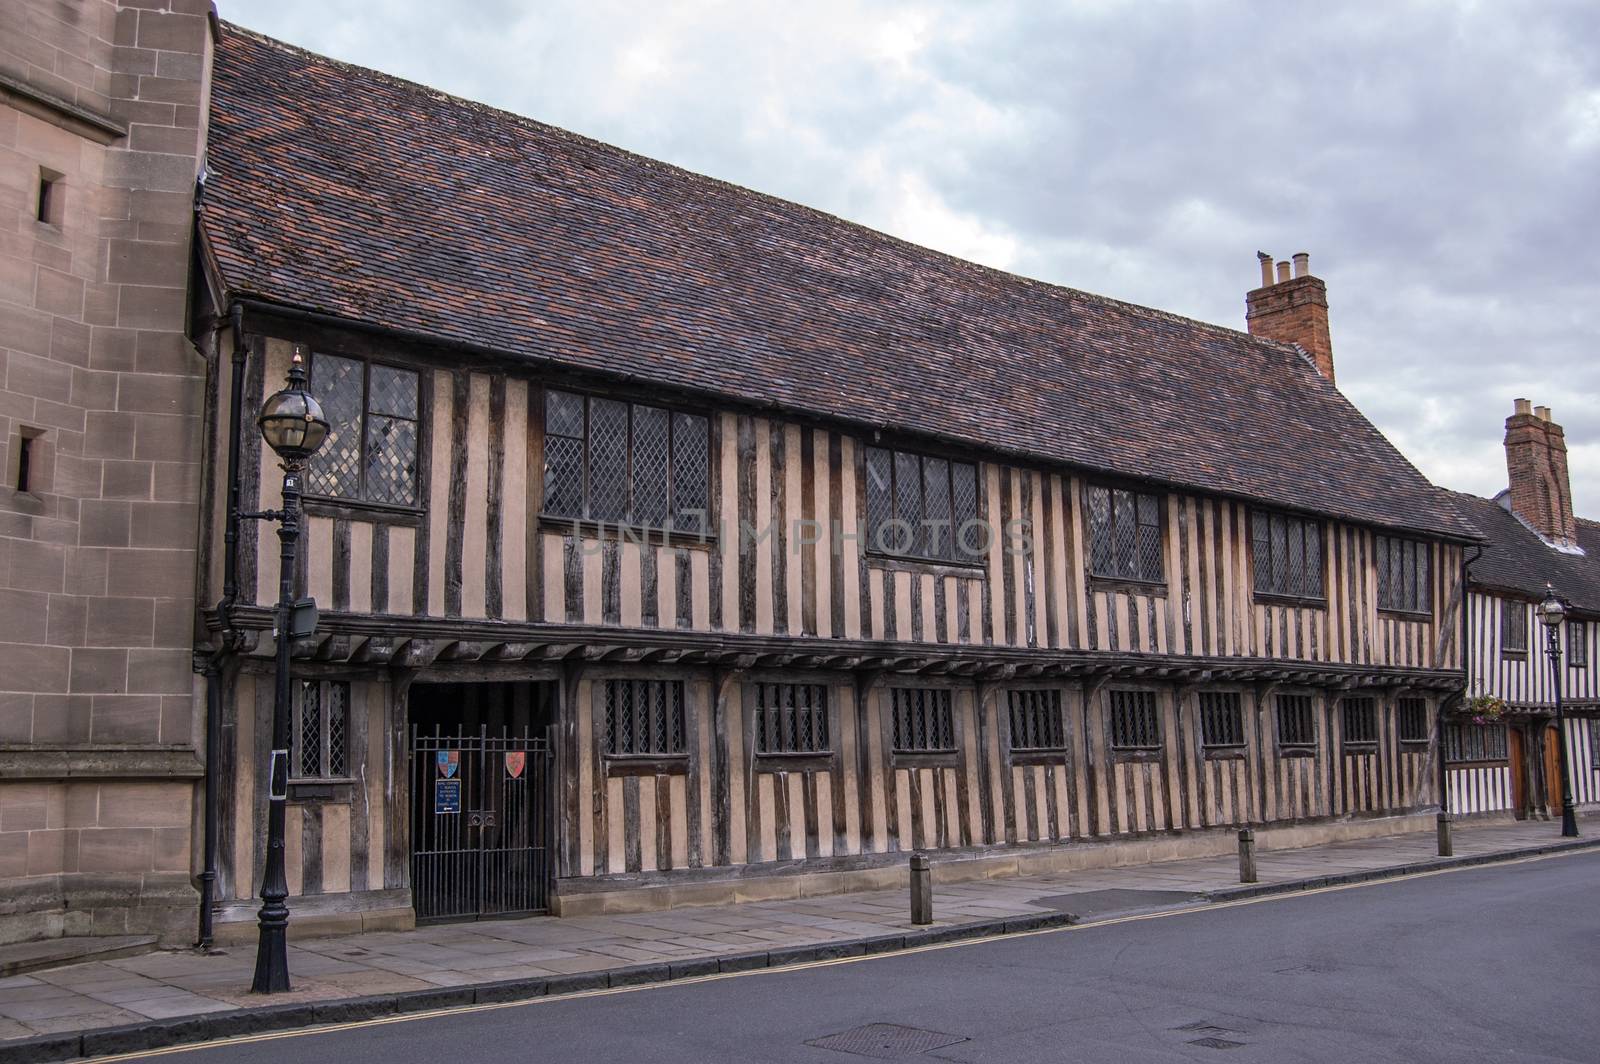 Medieval School, Stratford Upon Avon by BasPhoto